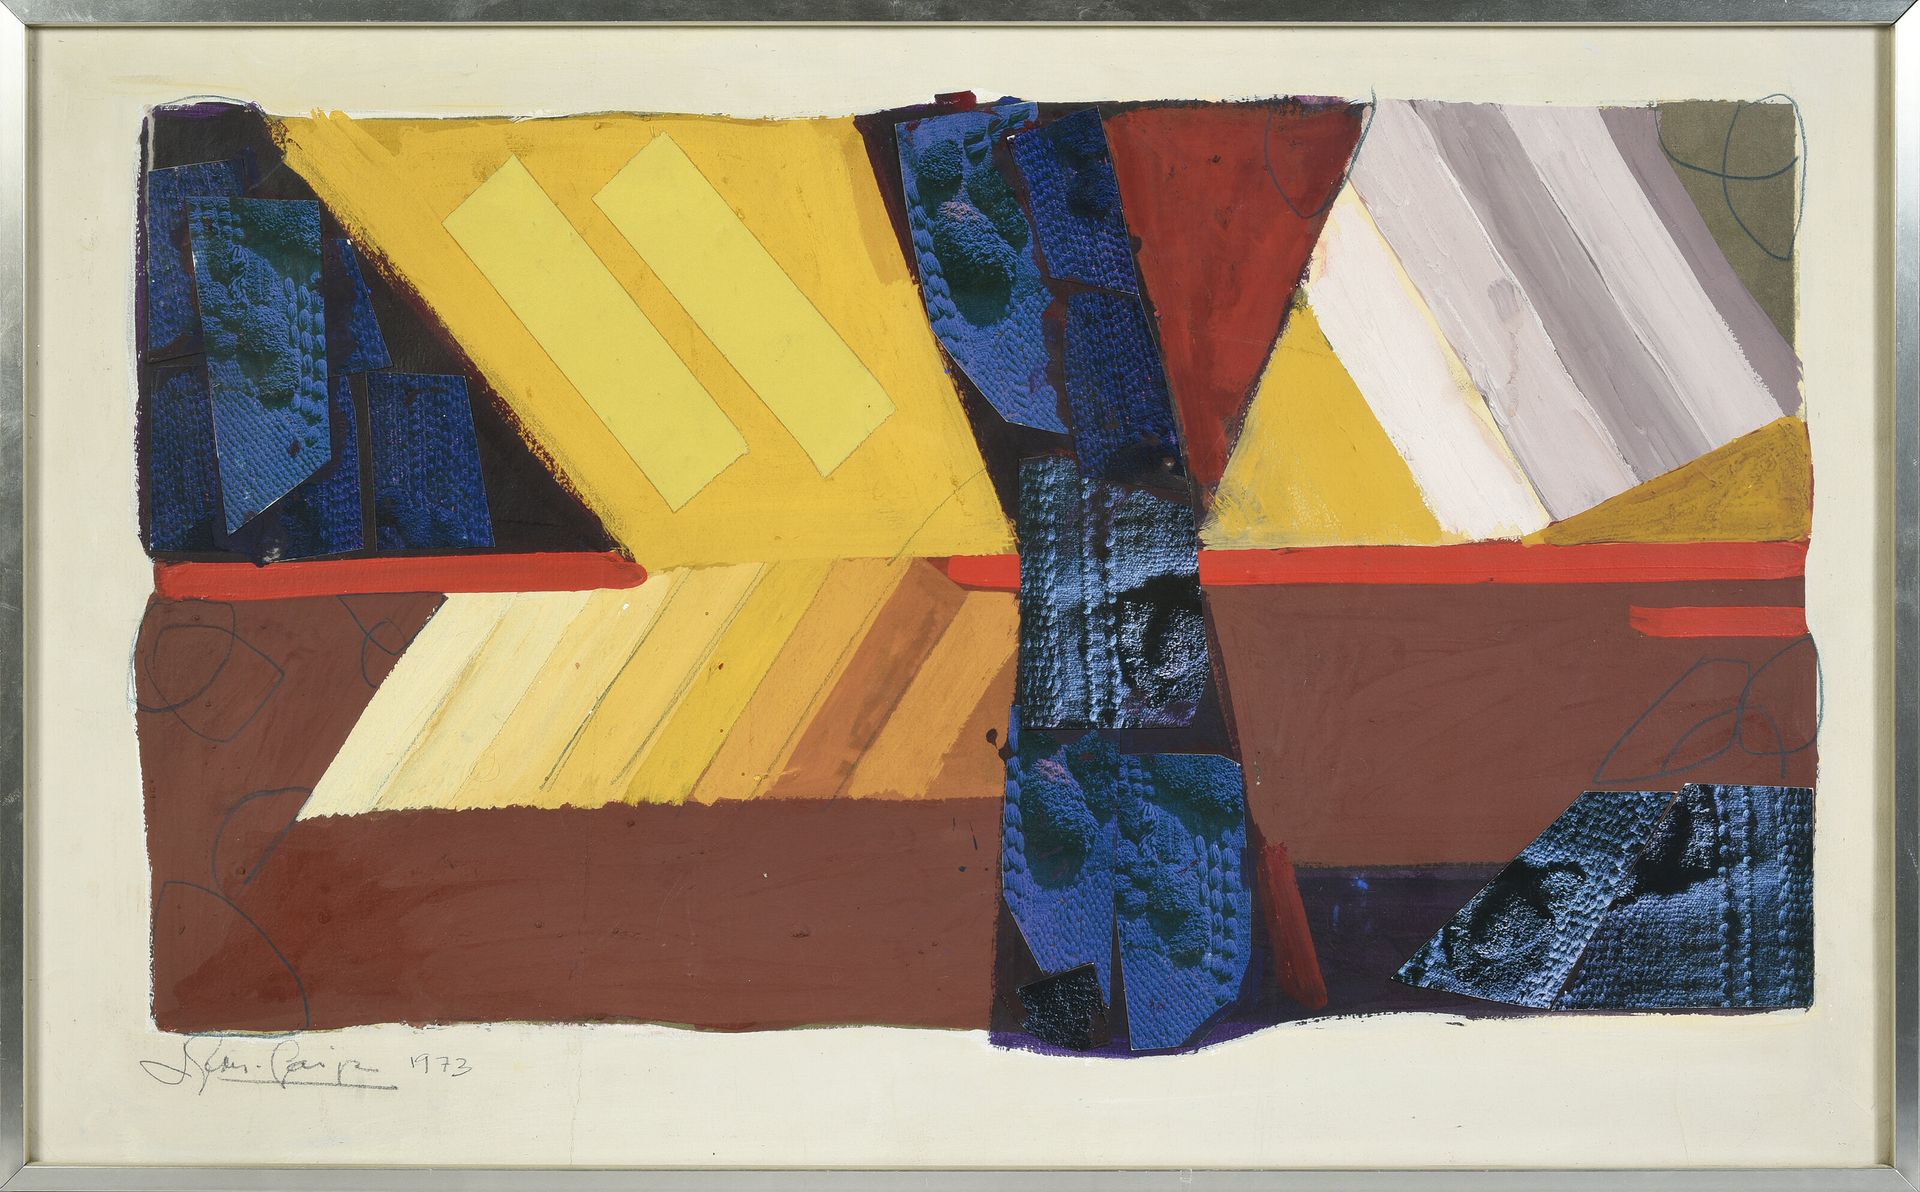 Josep GRAU-GARRIGA (1929 - 2011) 
Model-collage。1973.
博韦宫廷制作。
71 x 43 cm。